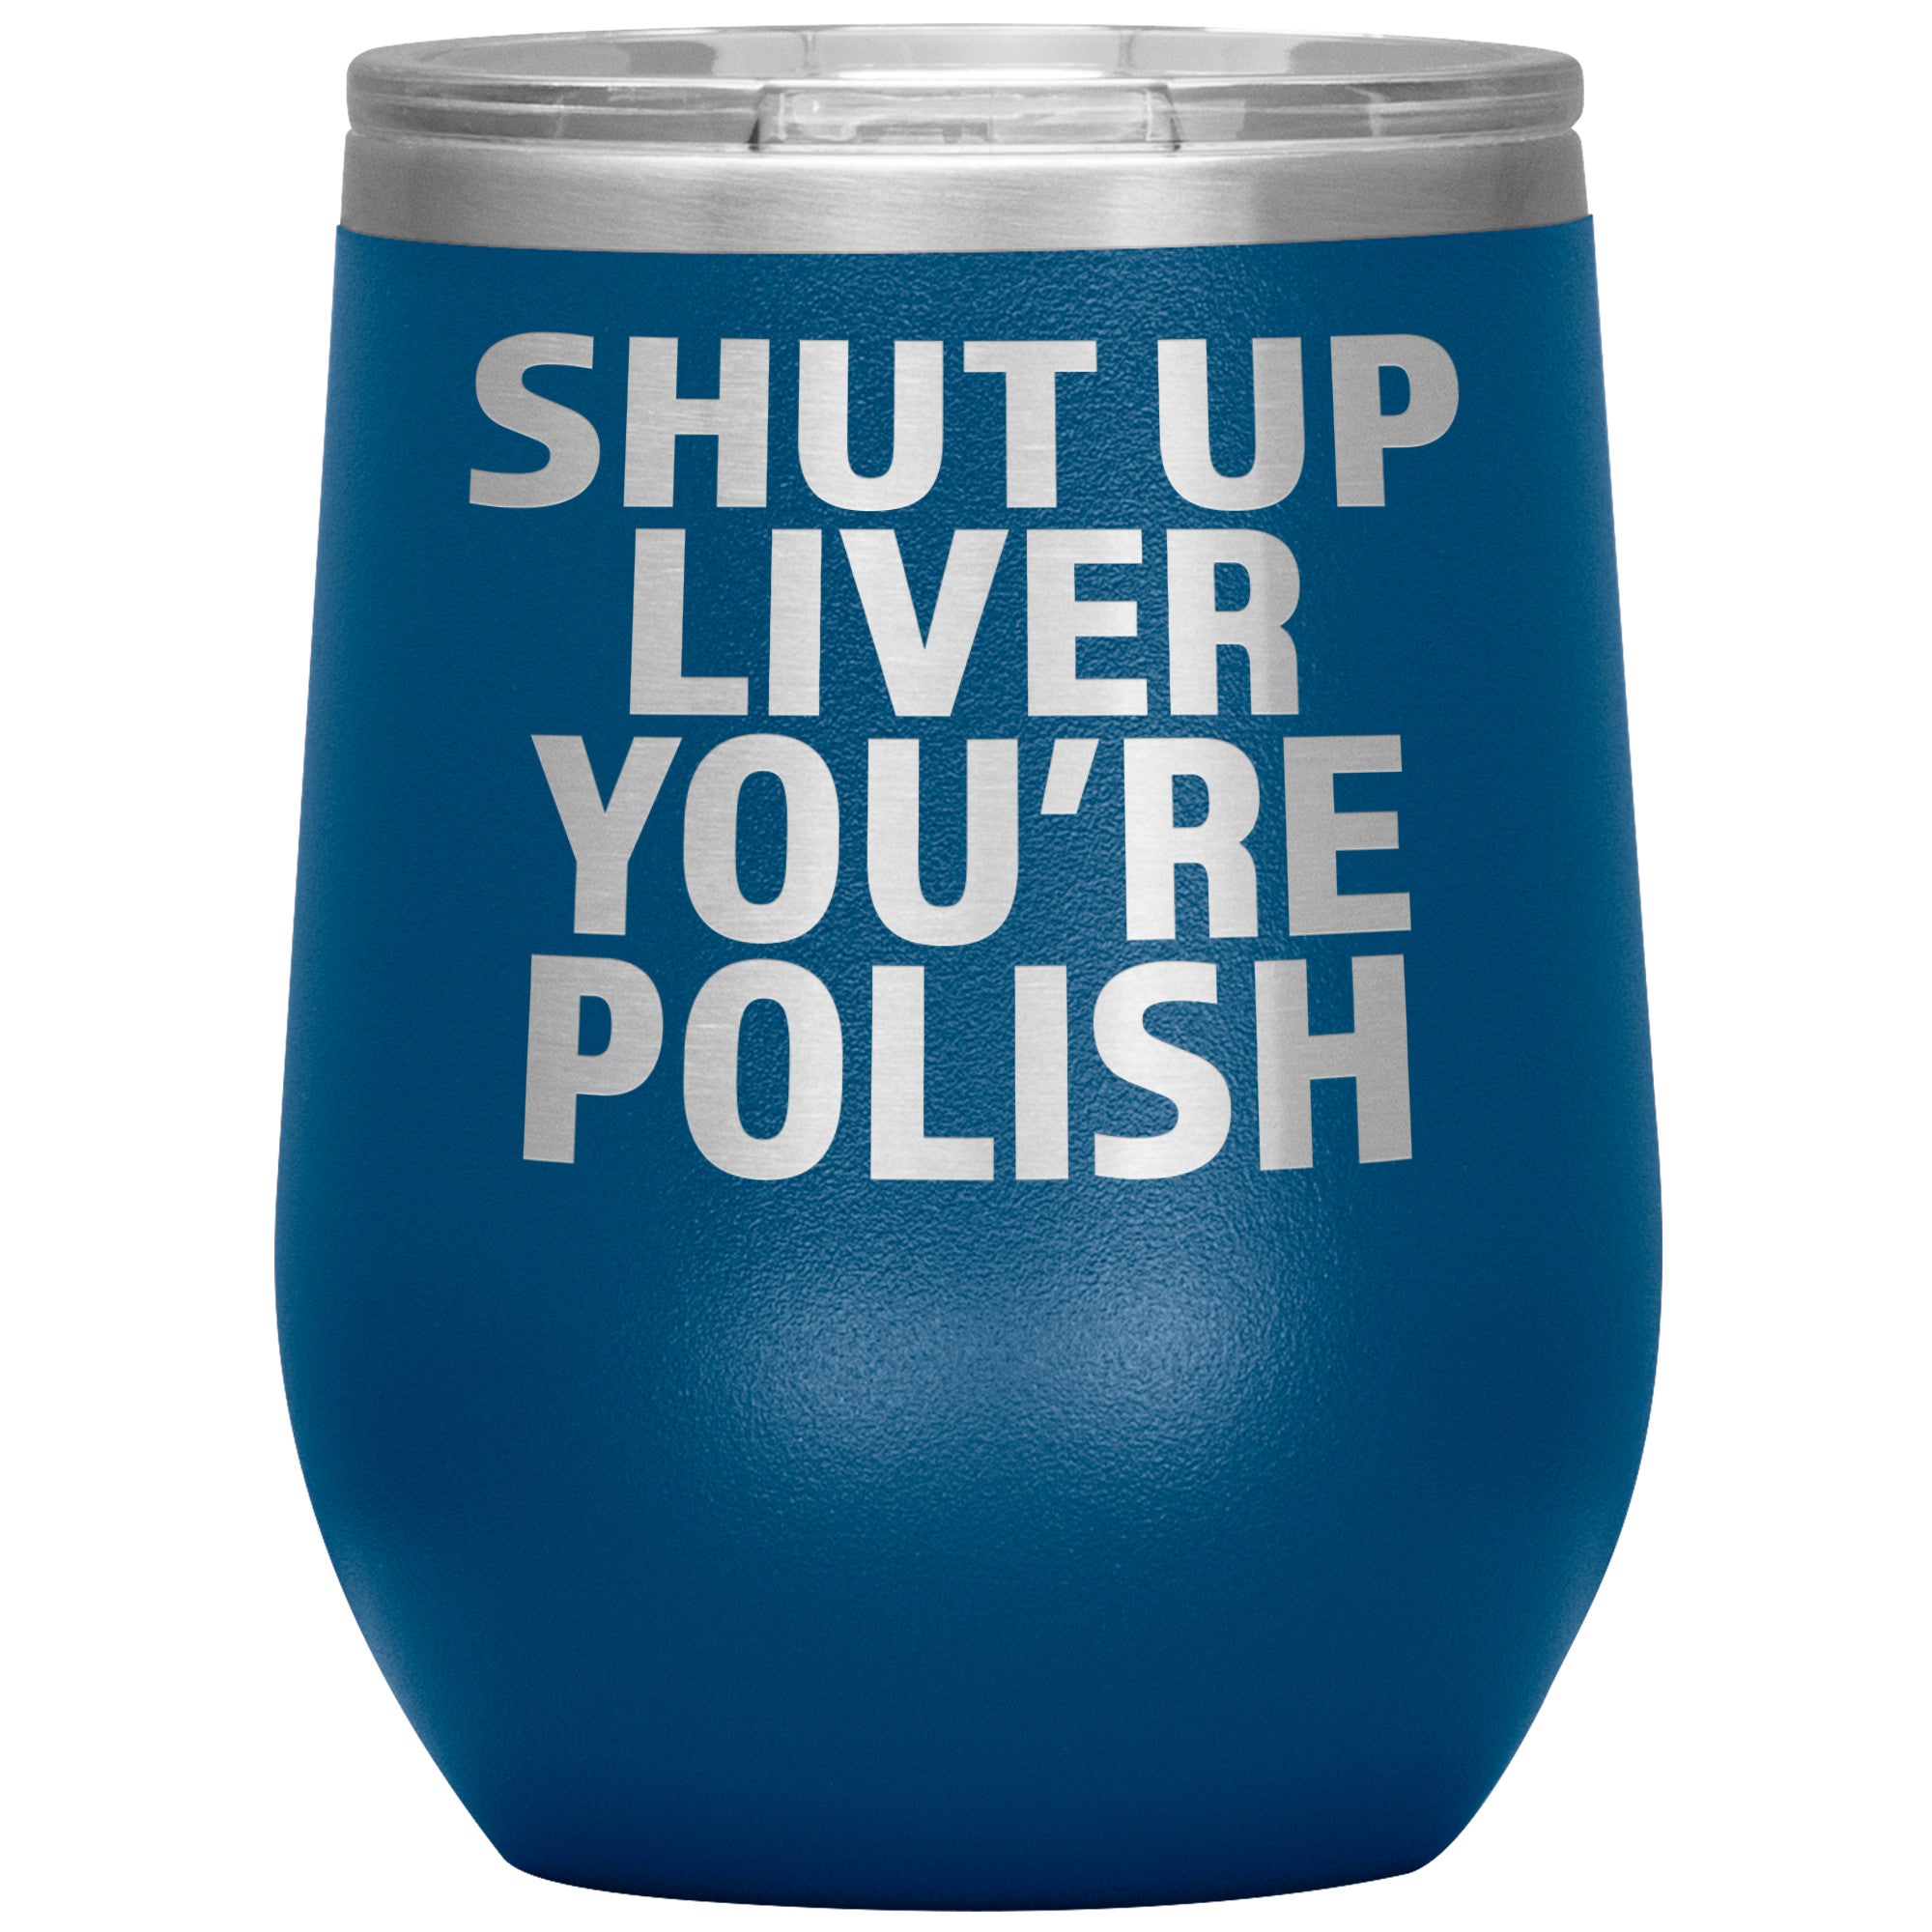 Shut Up Liver You're Polish Insulated Wine Tumbler Tumblers teelaunch Blue  